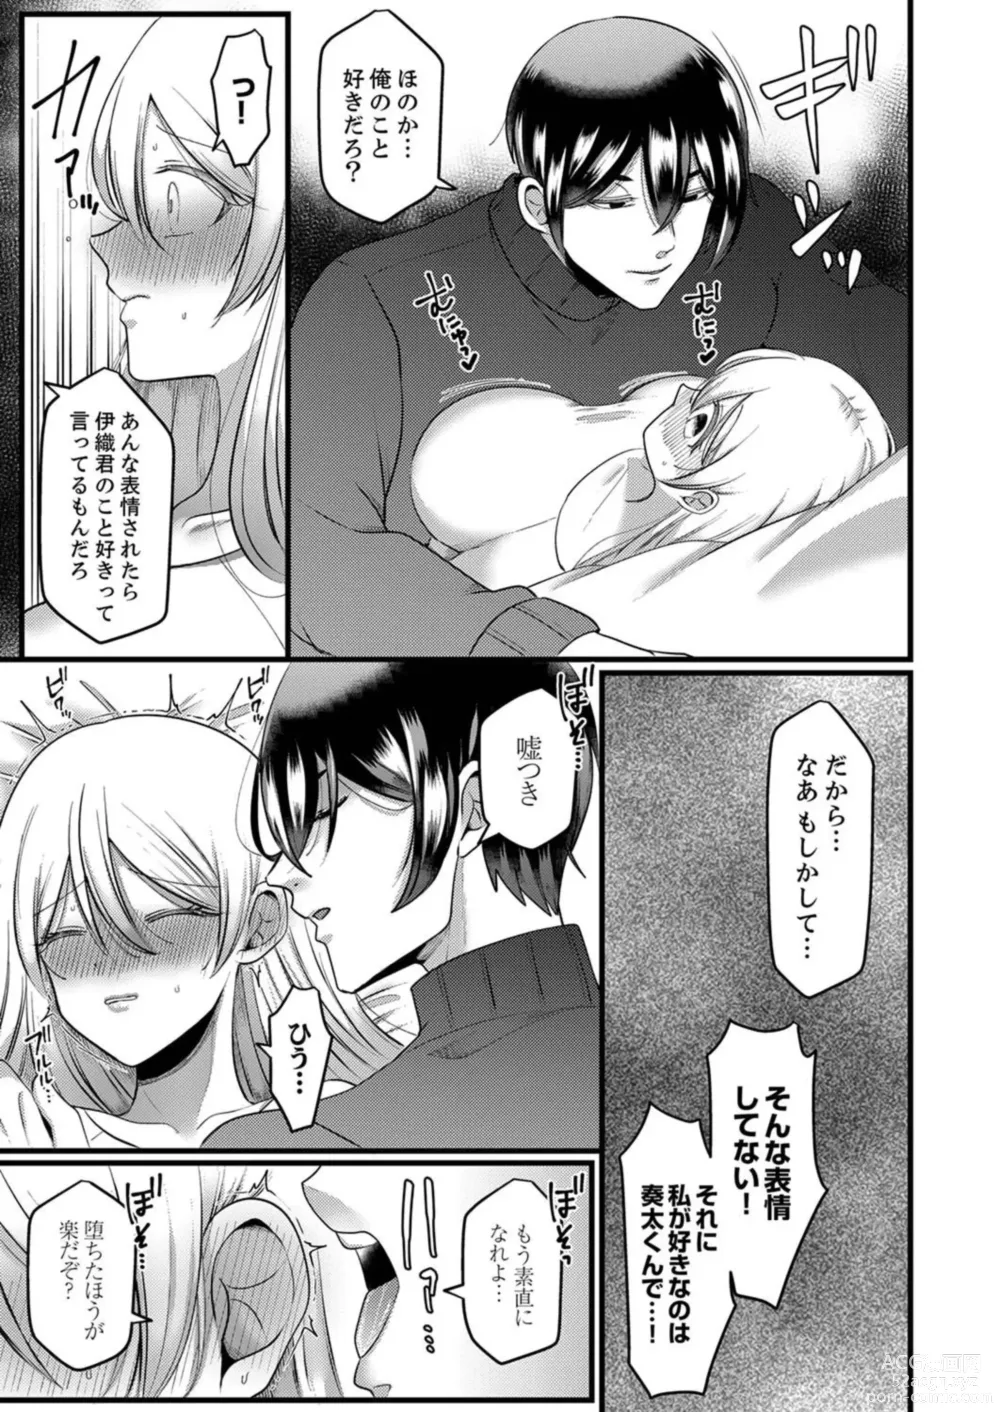 Page 148 of manga Kyohiken Nante Nain da Yo